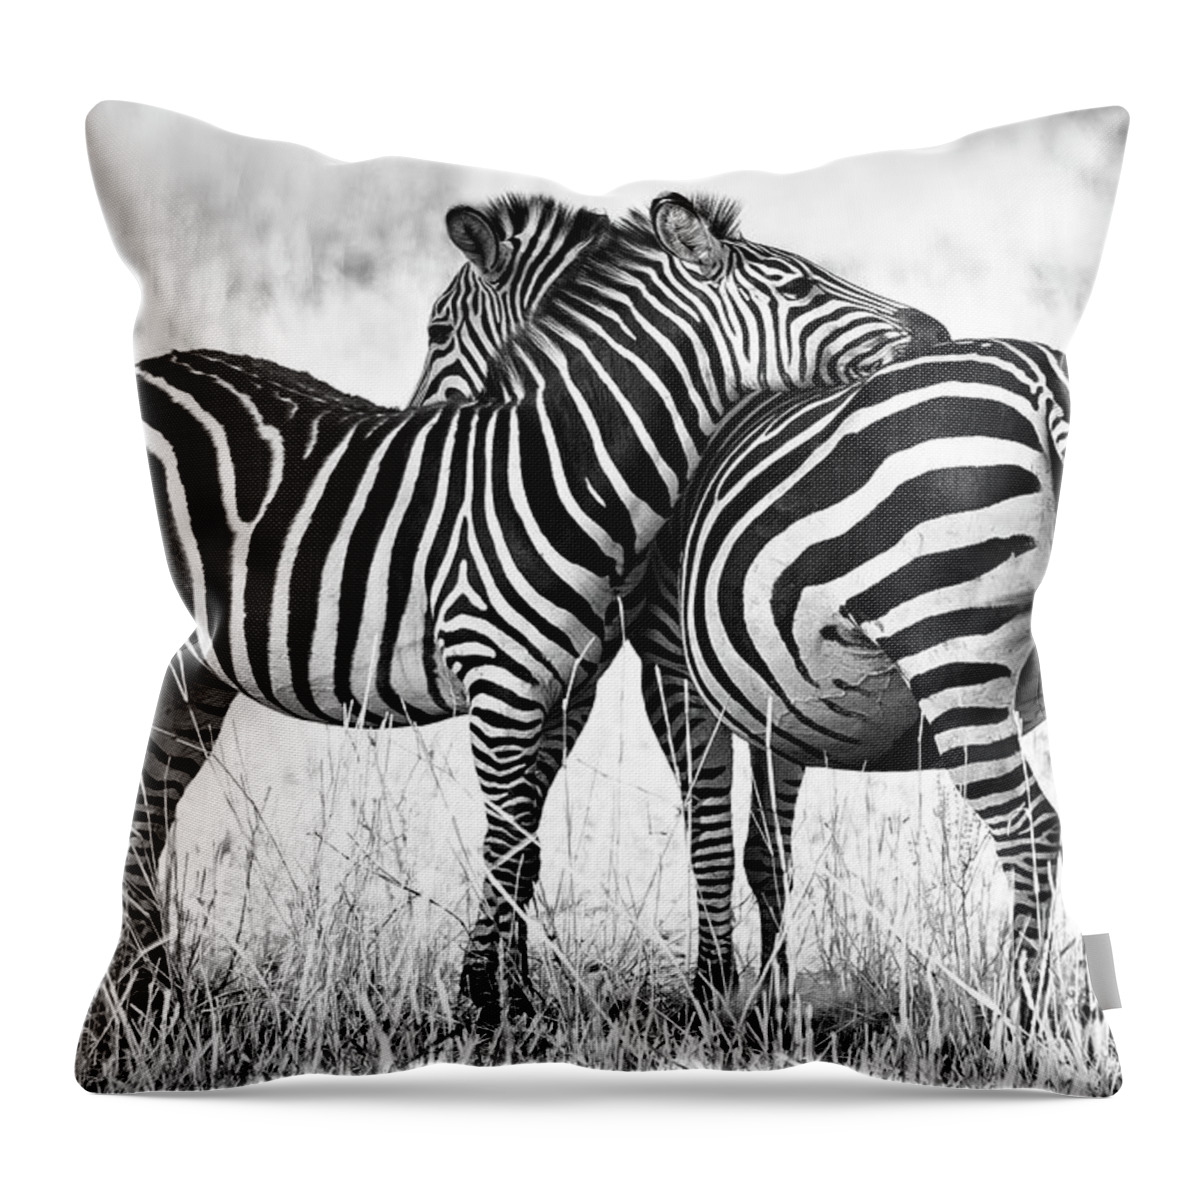 #faatoppicks Throw Pillow featuring the photograph Zebra Love by Adam Romanowicz